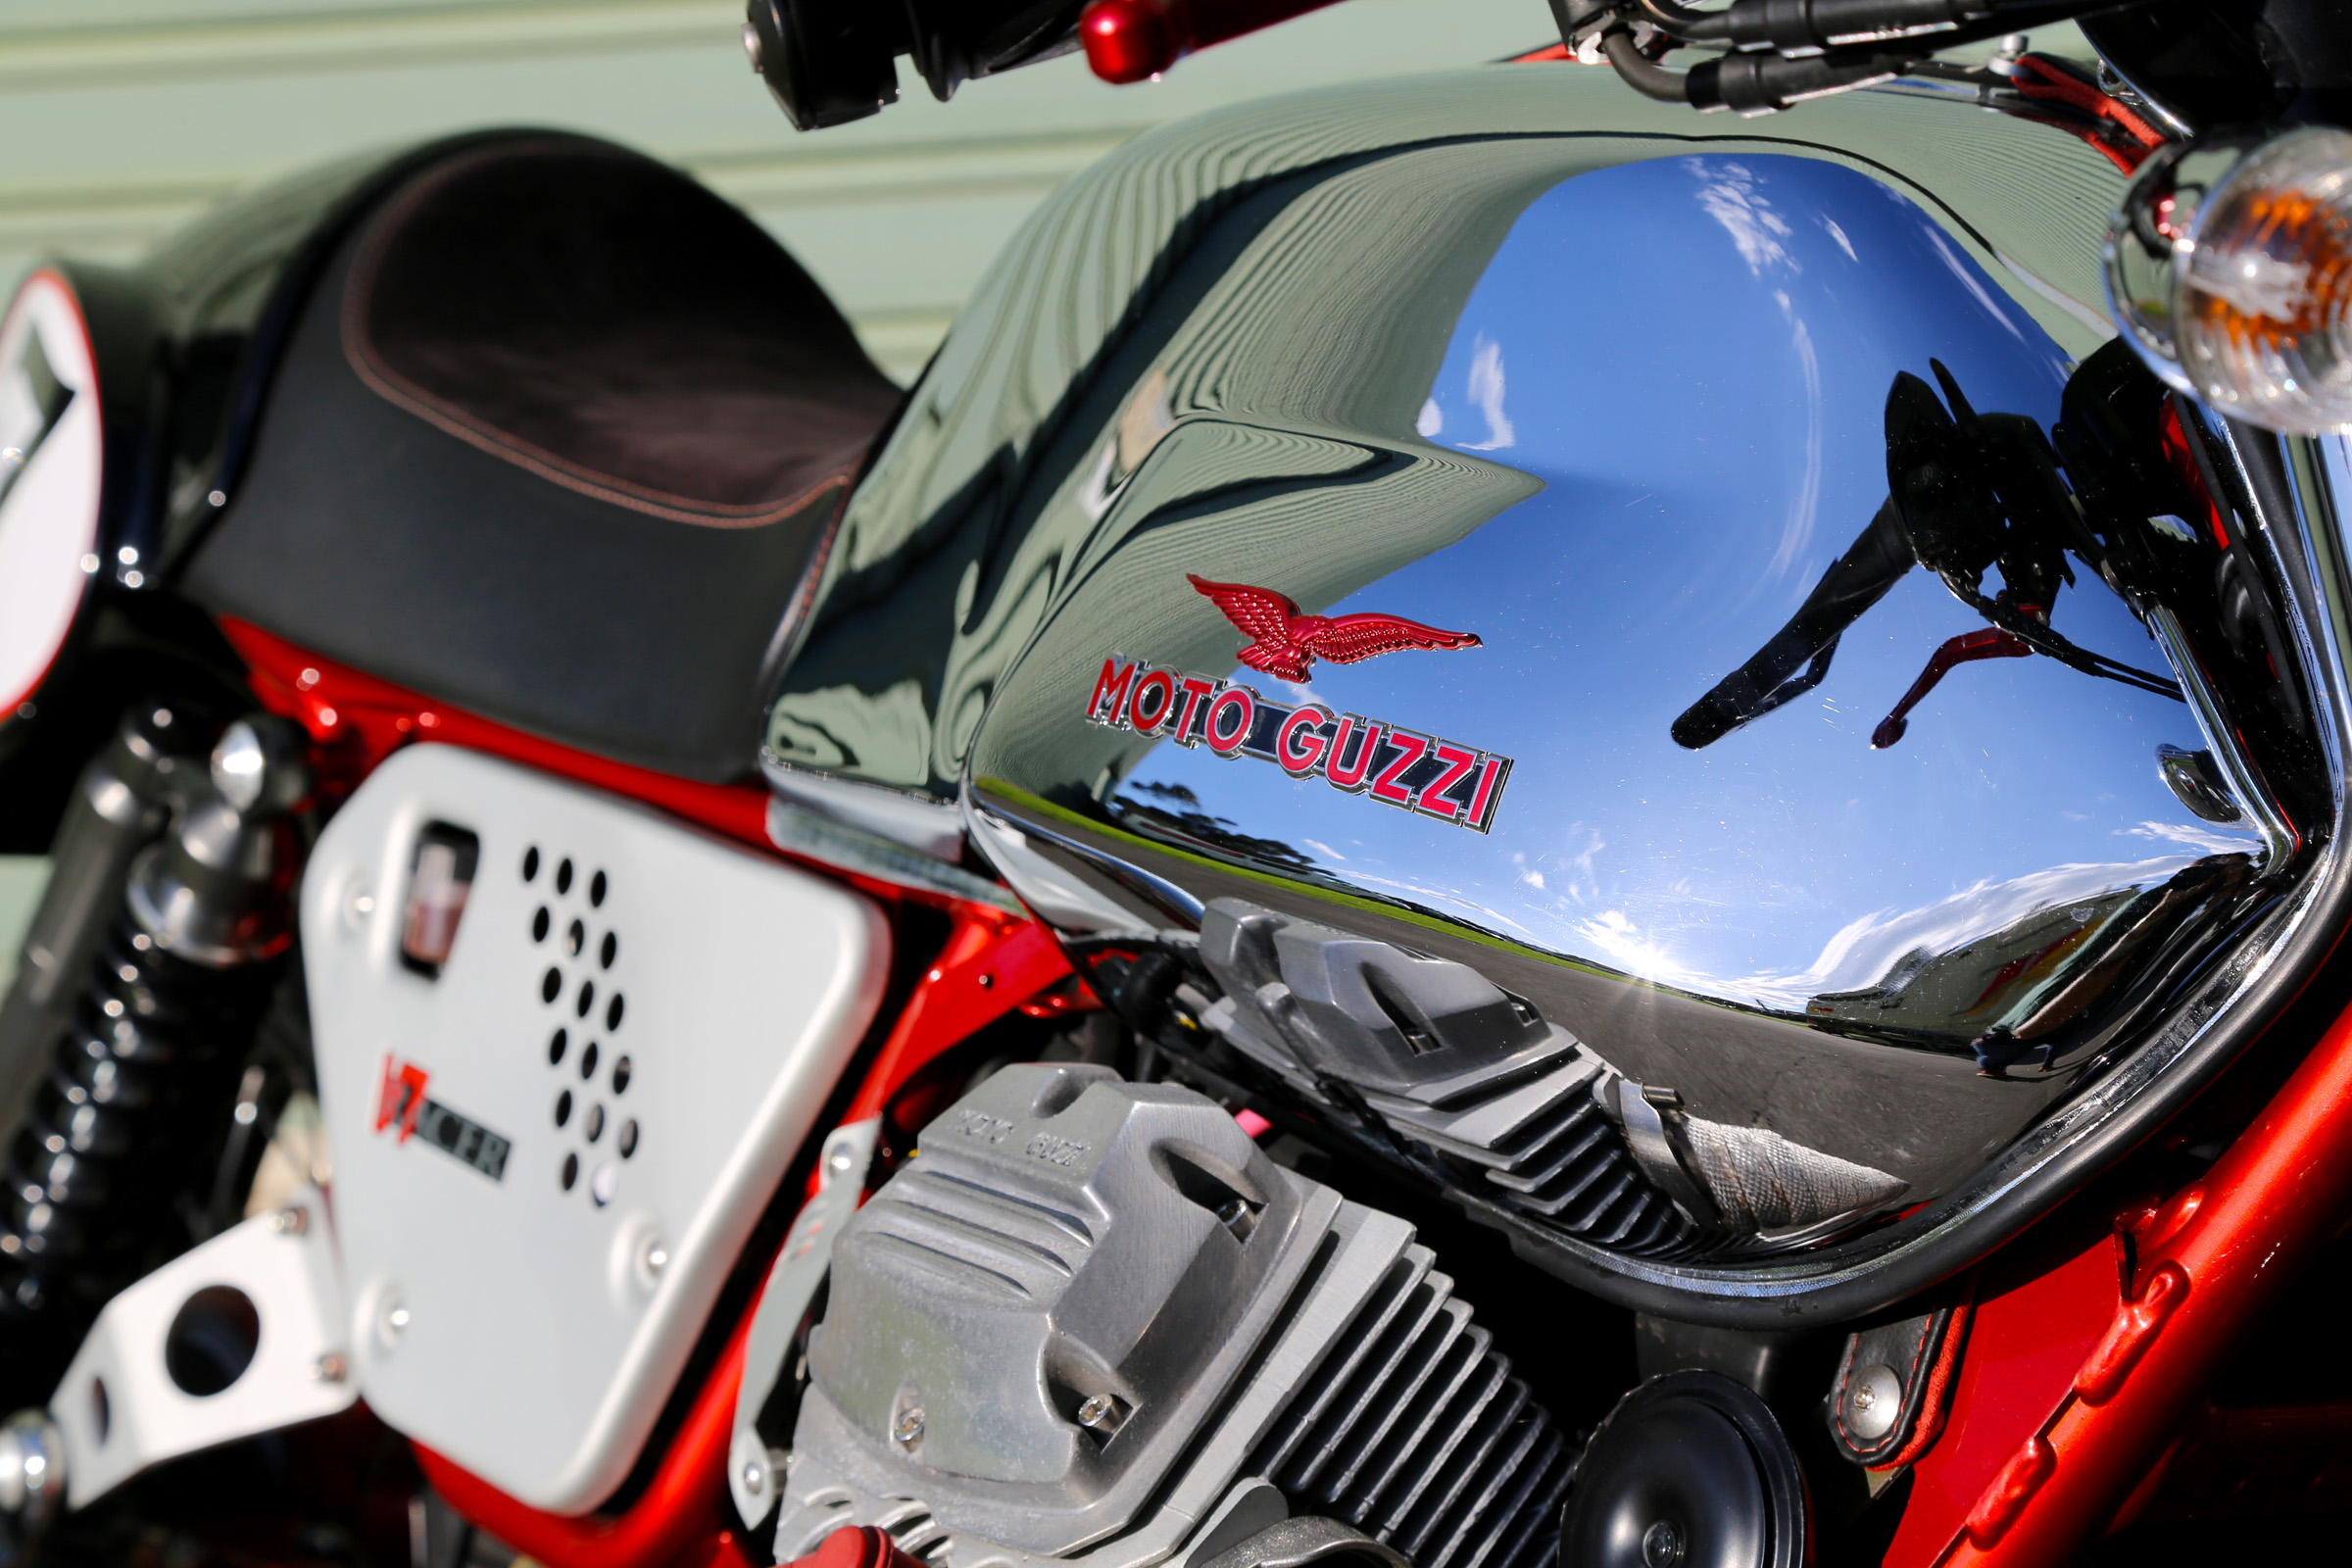 2012 Moto Guzzi V7 Racer detail5